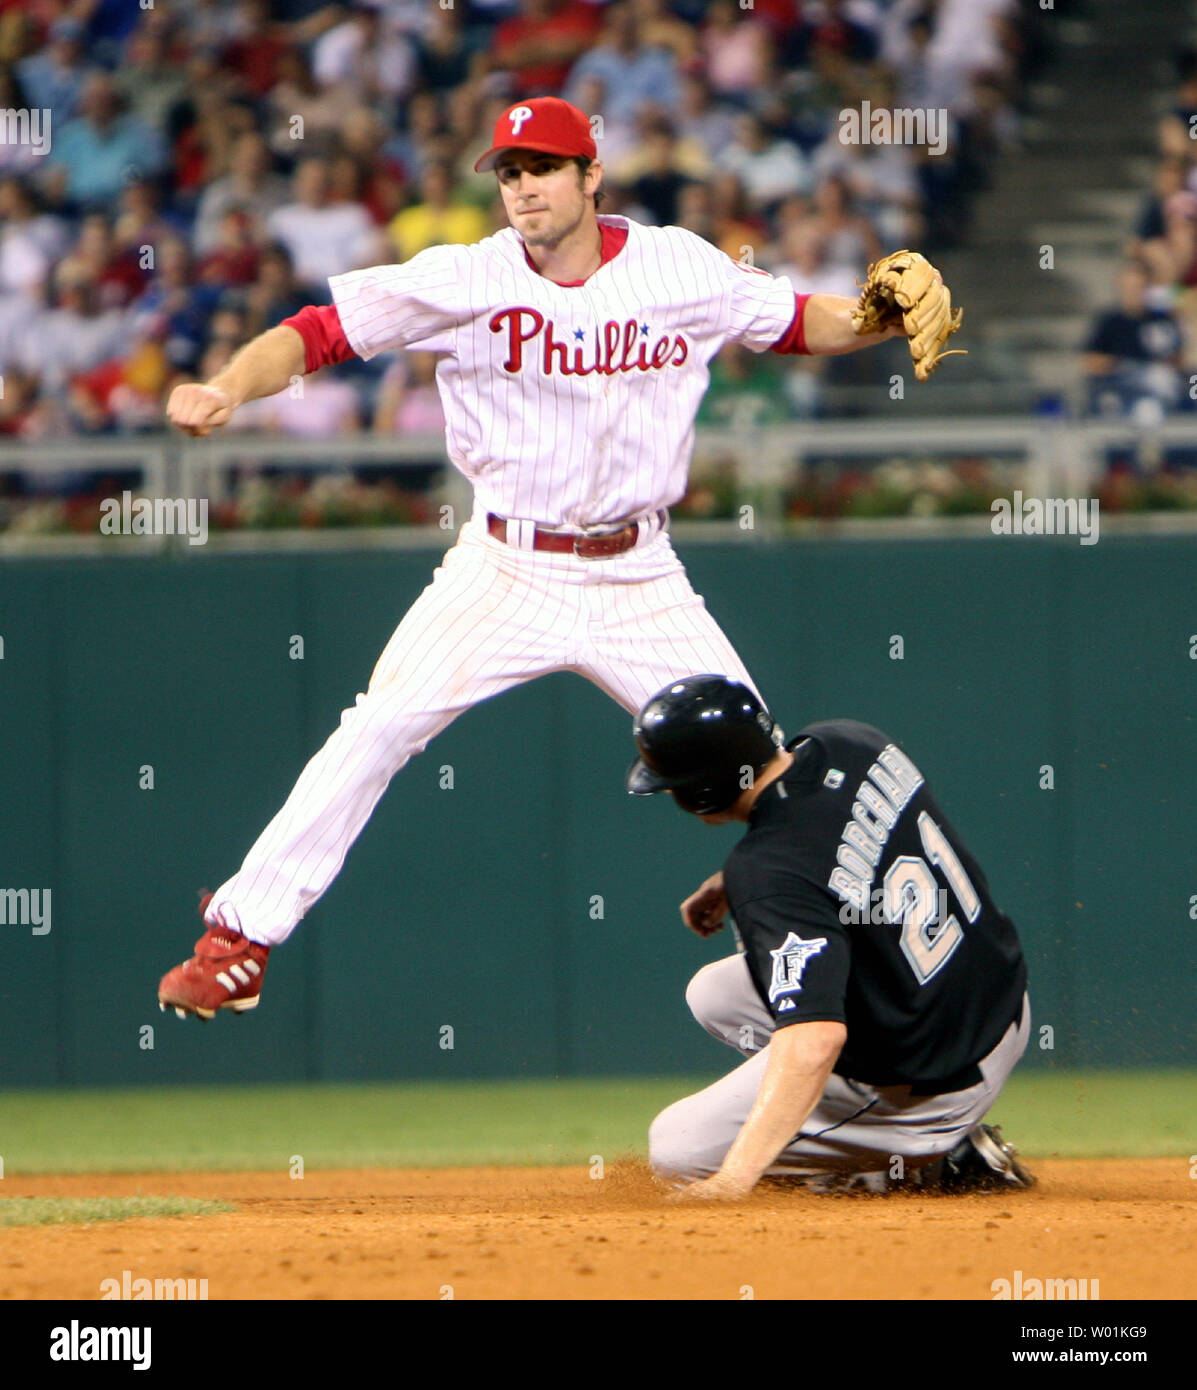 Philadelphia's second baseman Chase Utley goes high to avoid the